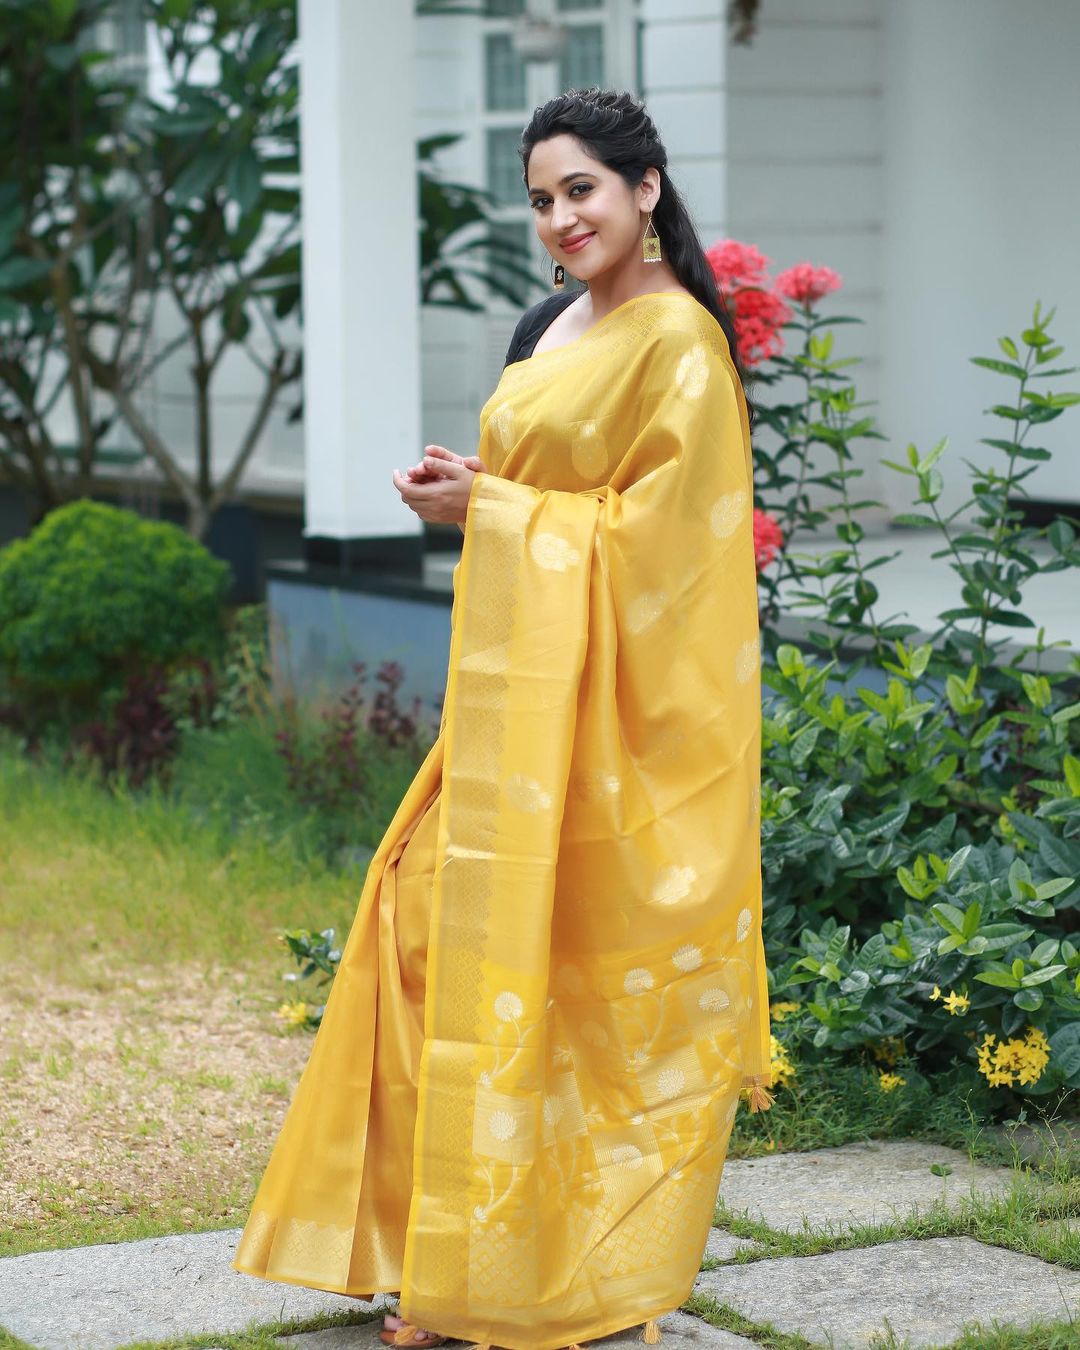 Malayalam Actress Miya George Stills in Yellow Saree Black Blouse